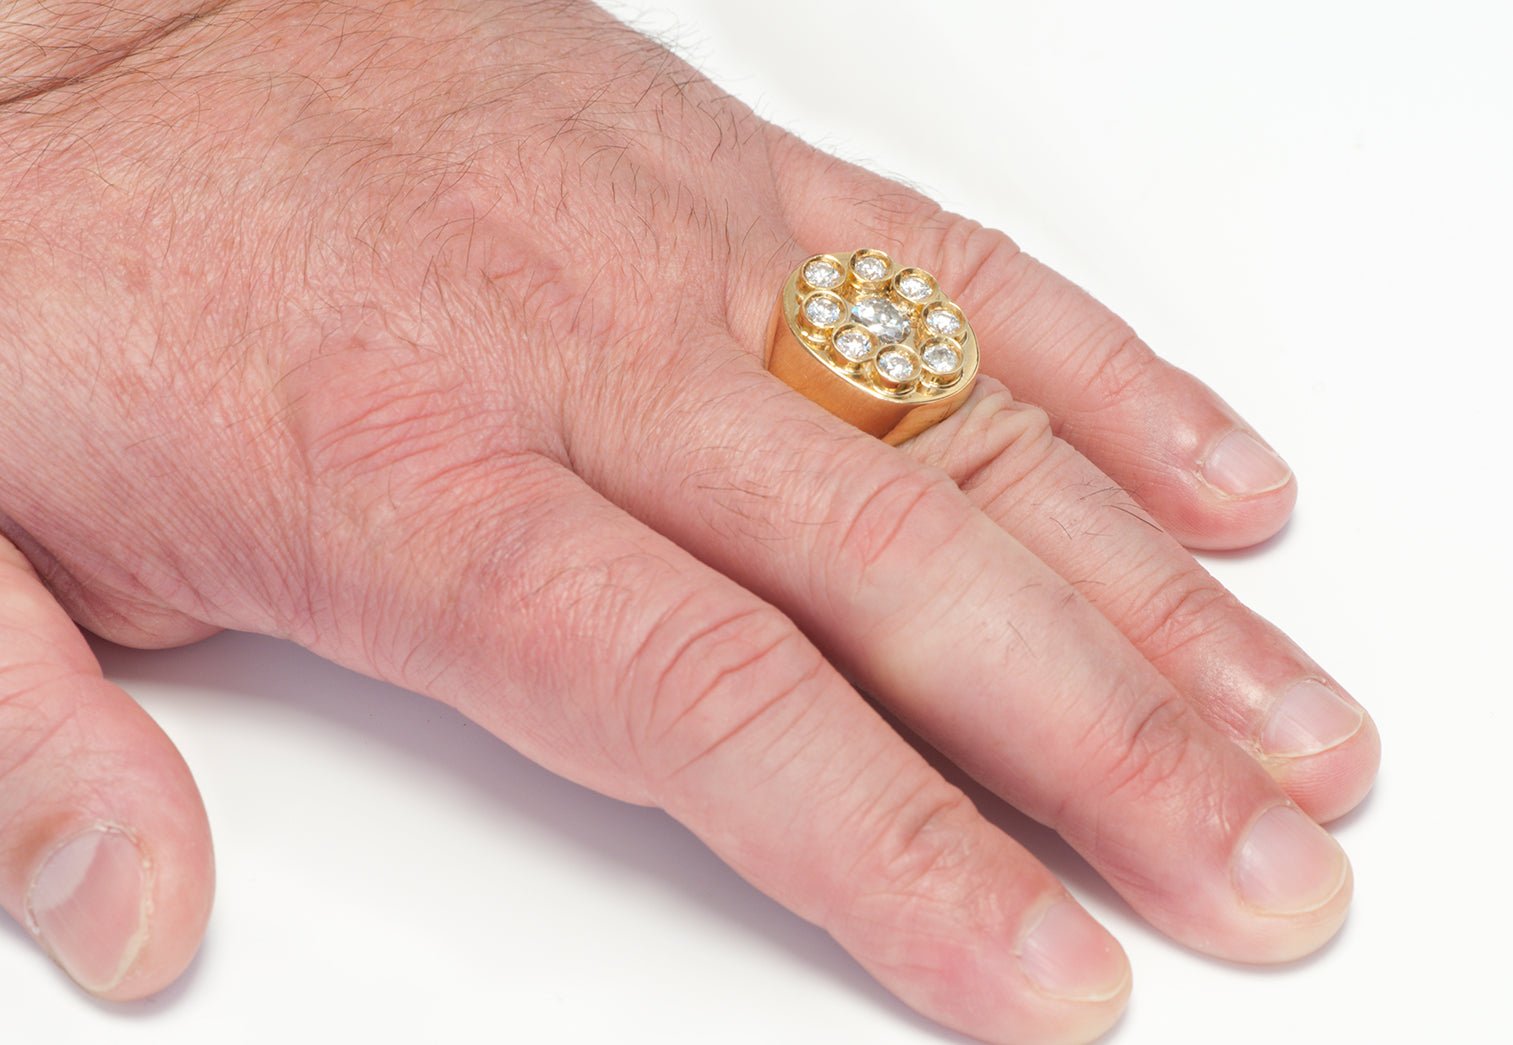 Vintage Diamond Gold Men's Ring